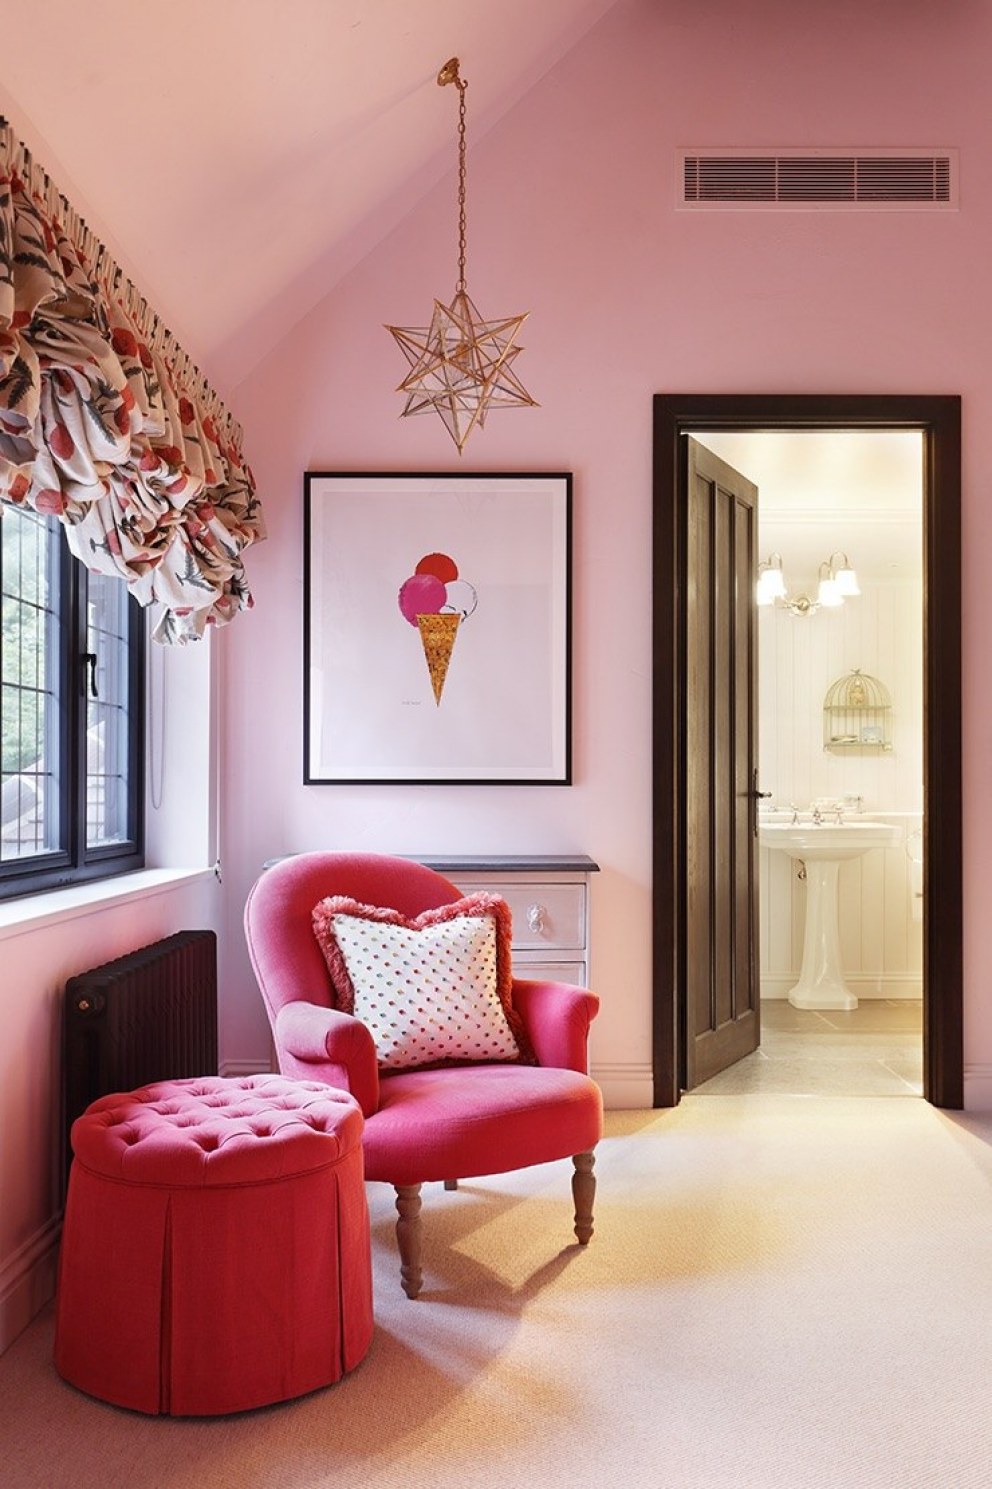 Charmwood | Girls Bedroom | Interior Designers